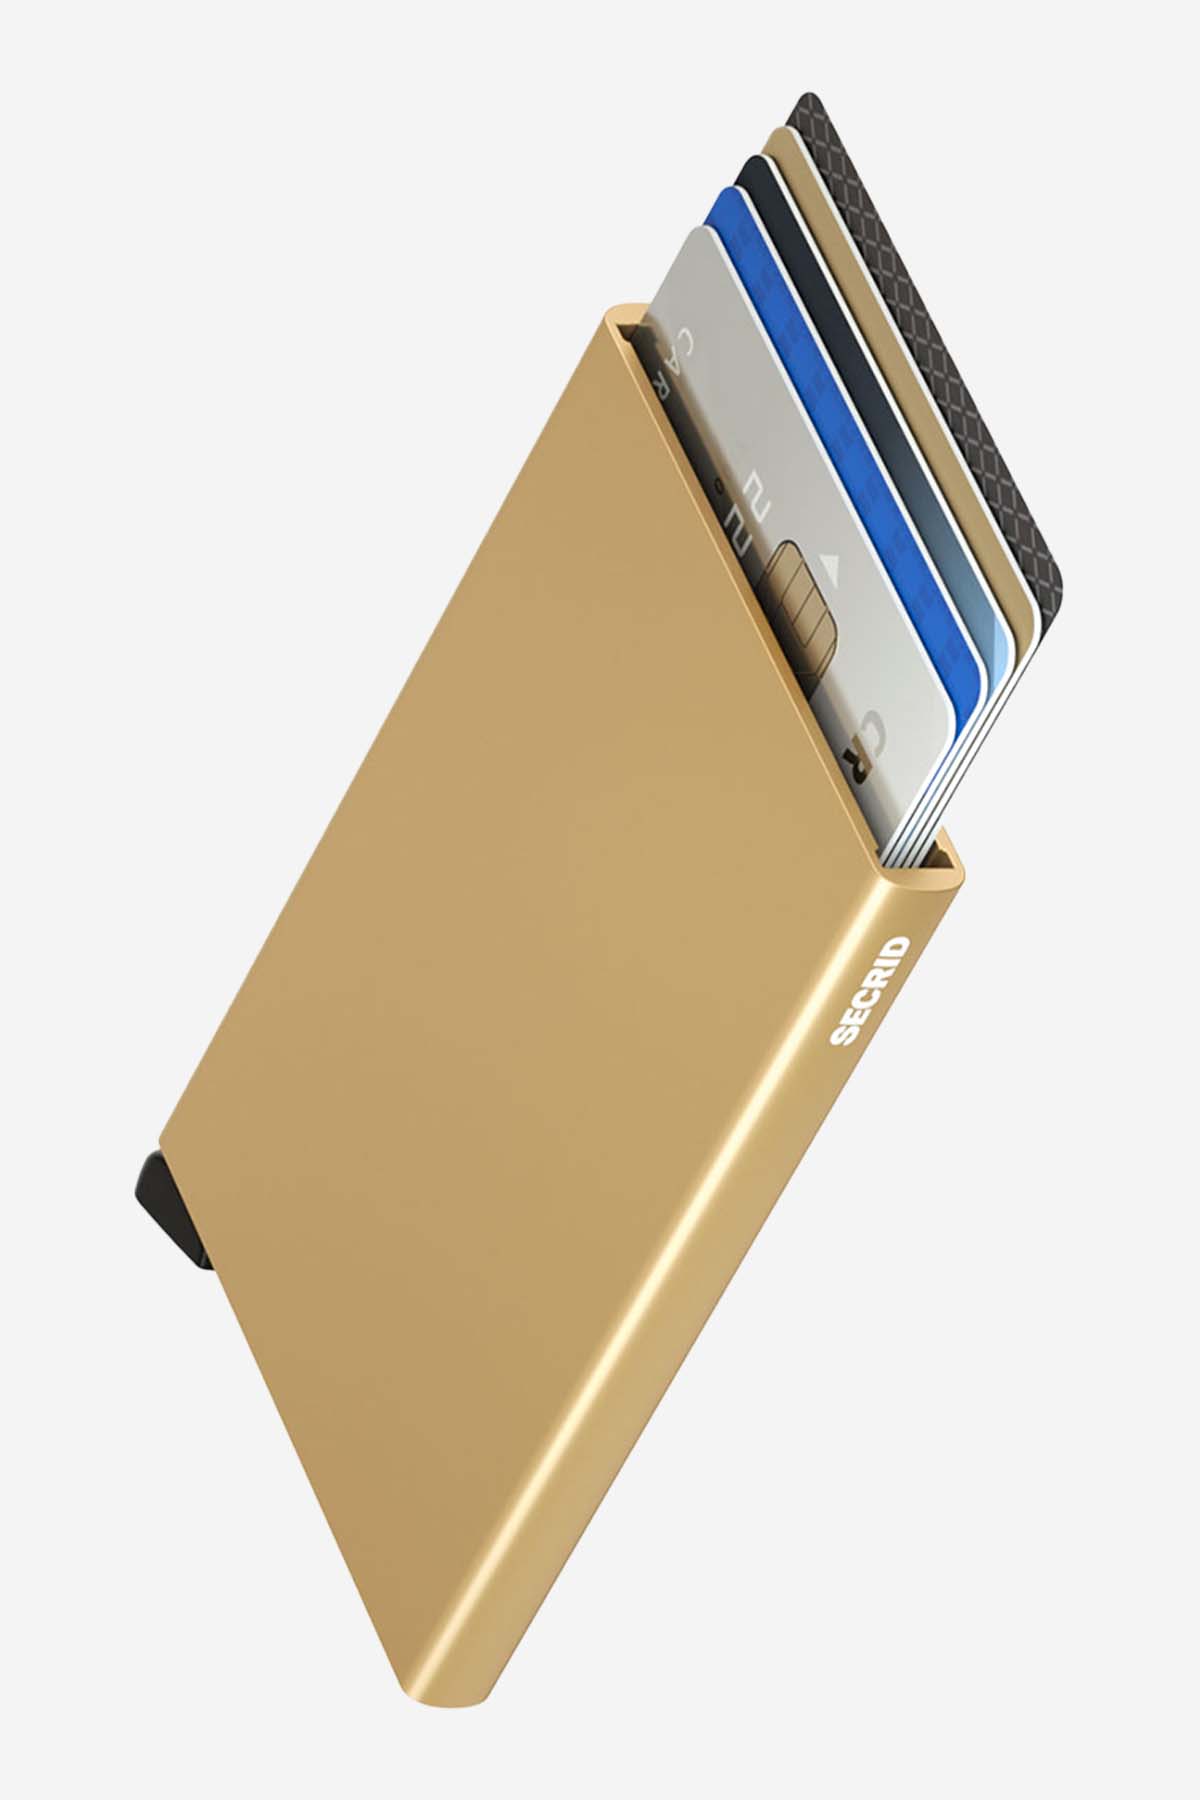 Cardprotector Gold